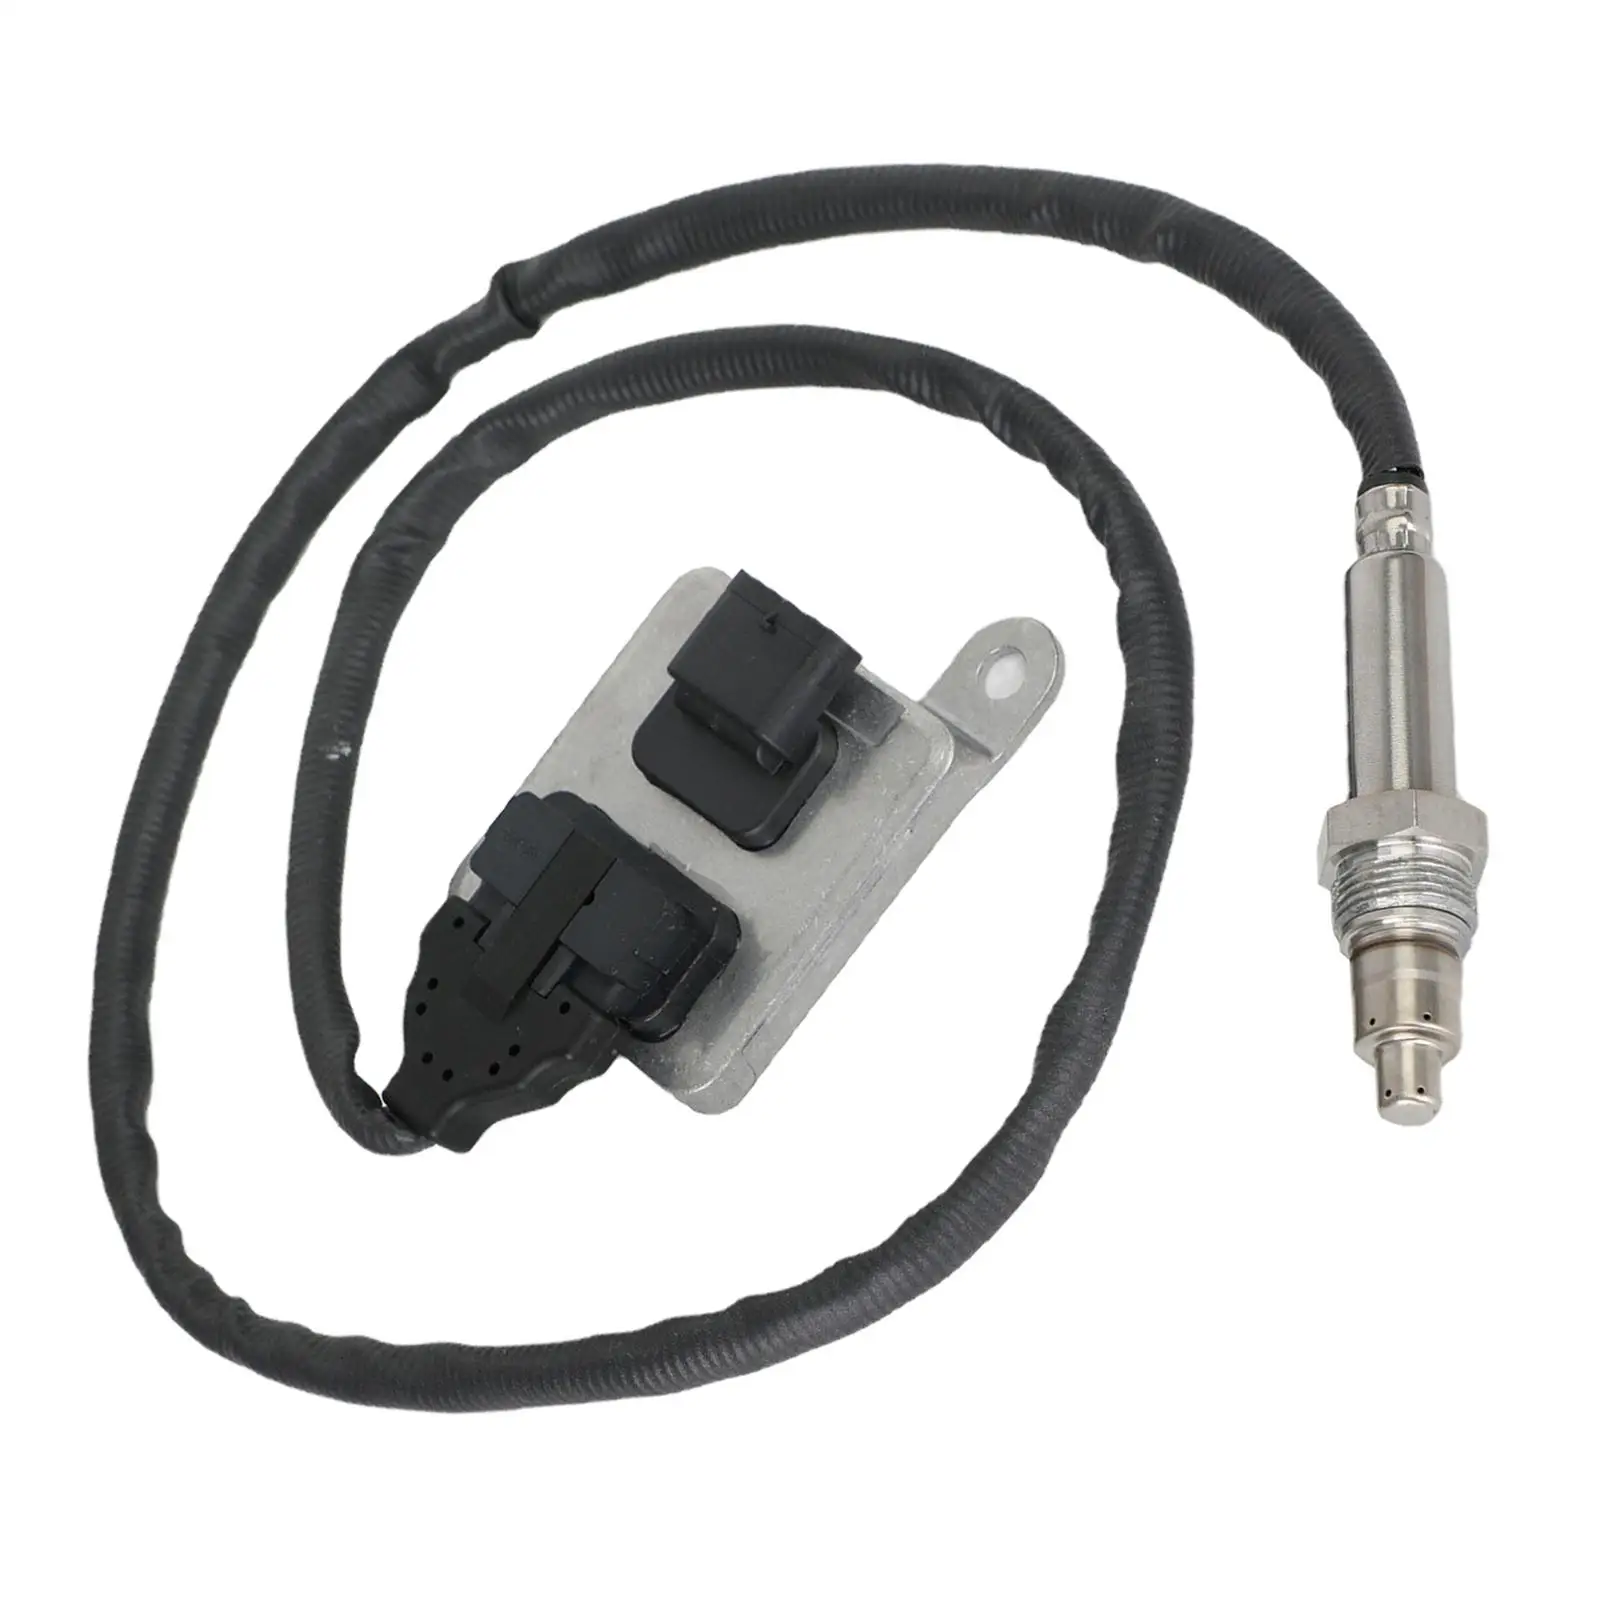 Nox Sensor Nitrogen Oxygen Sensor Replacement Fit for Isuzu 89823-13911